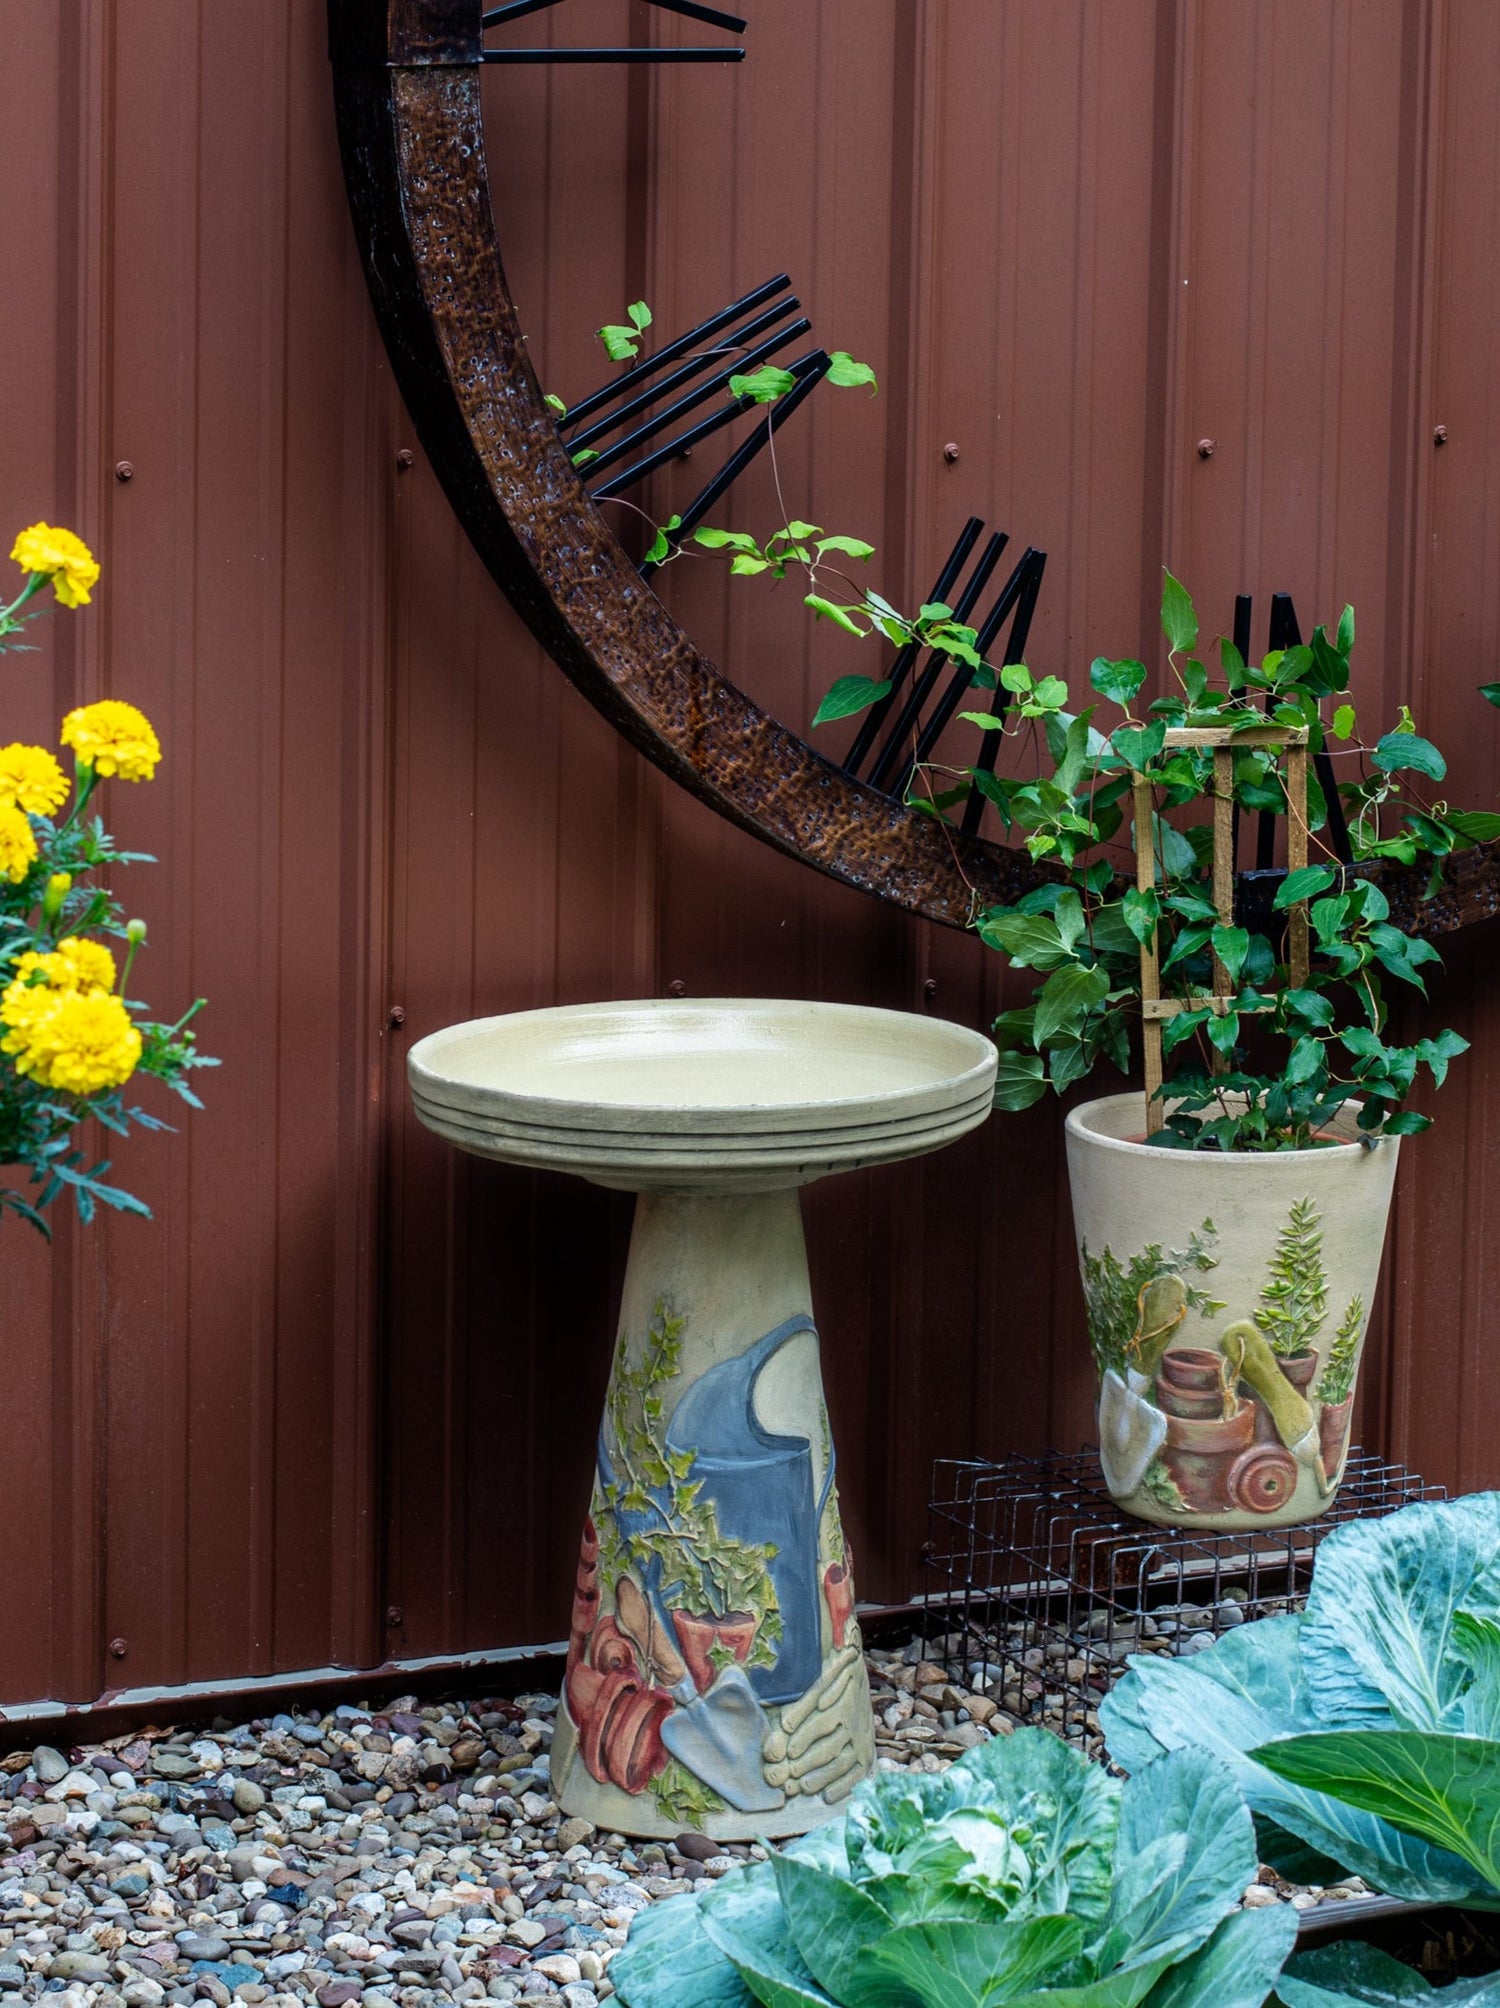 ceramic birdbath set with hand painted garden Tools and planter in landscaped garden area